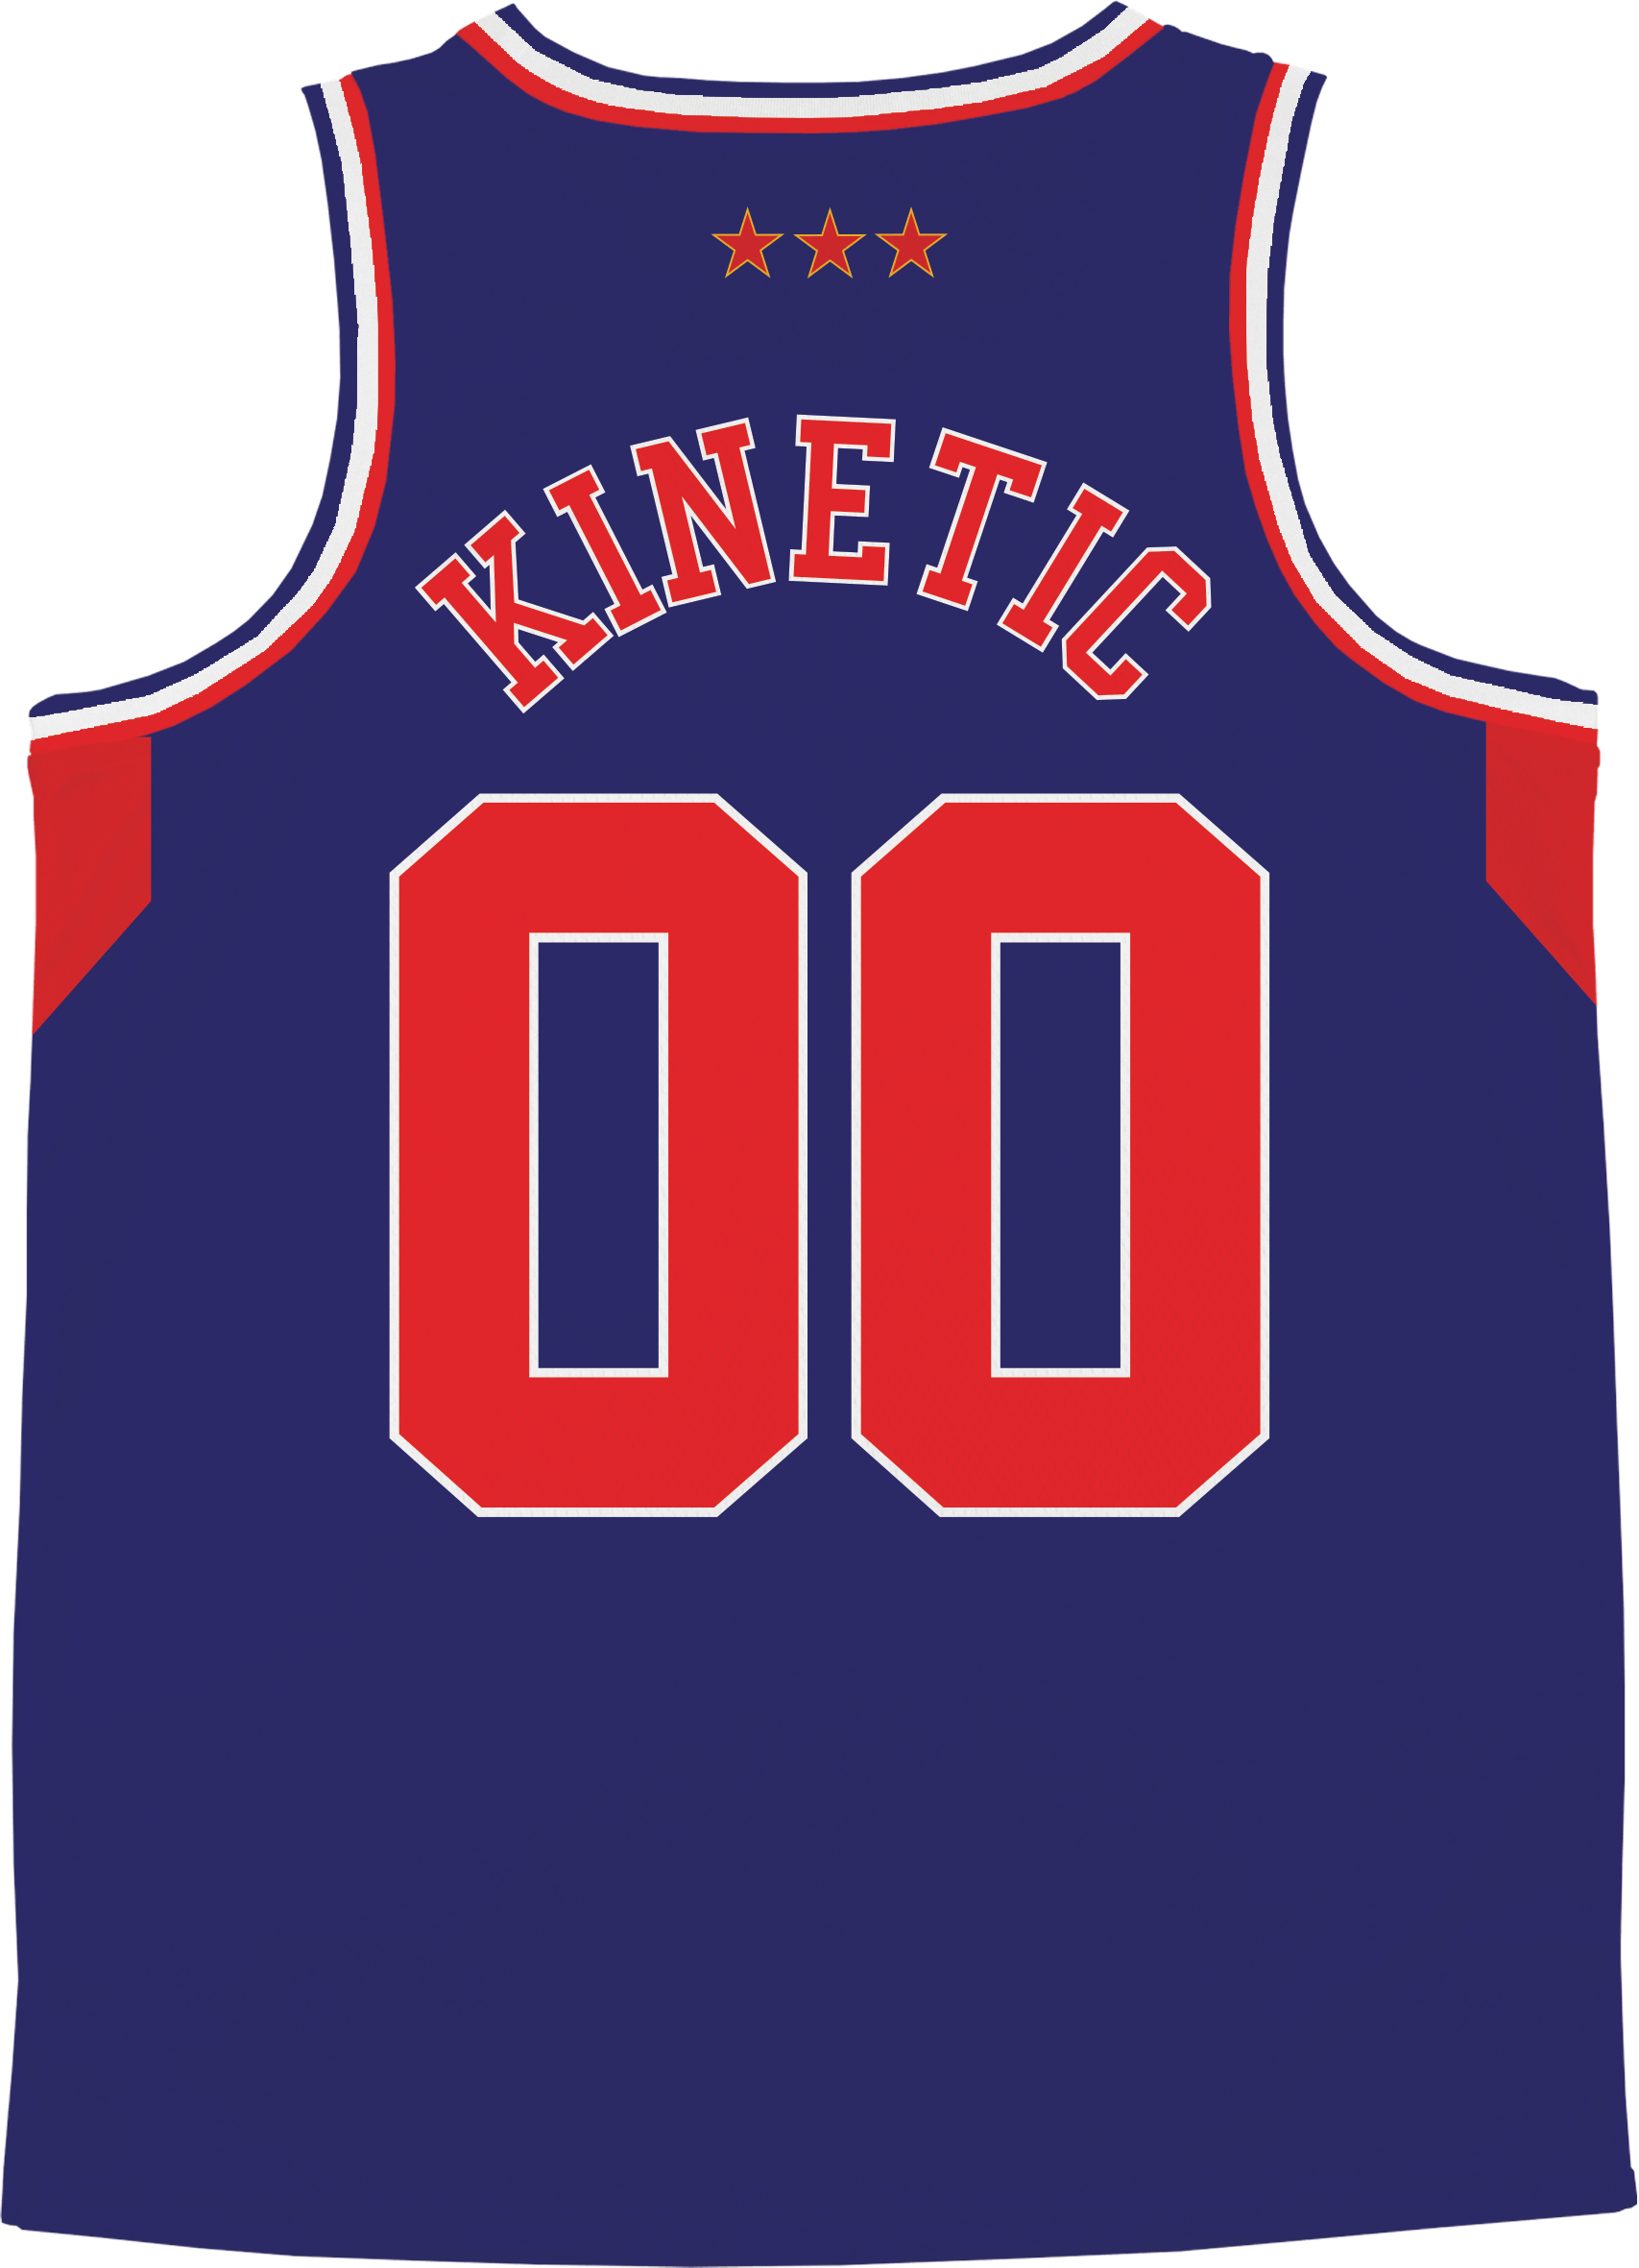 Kappa Alpha Order - Retro Ballers Basketball Jersey - Kinetic Society